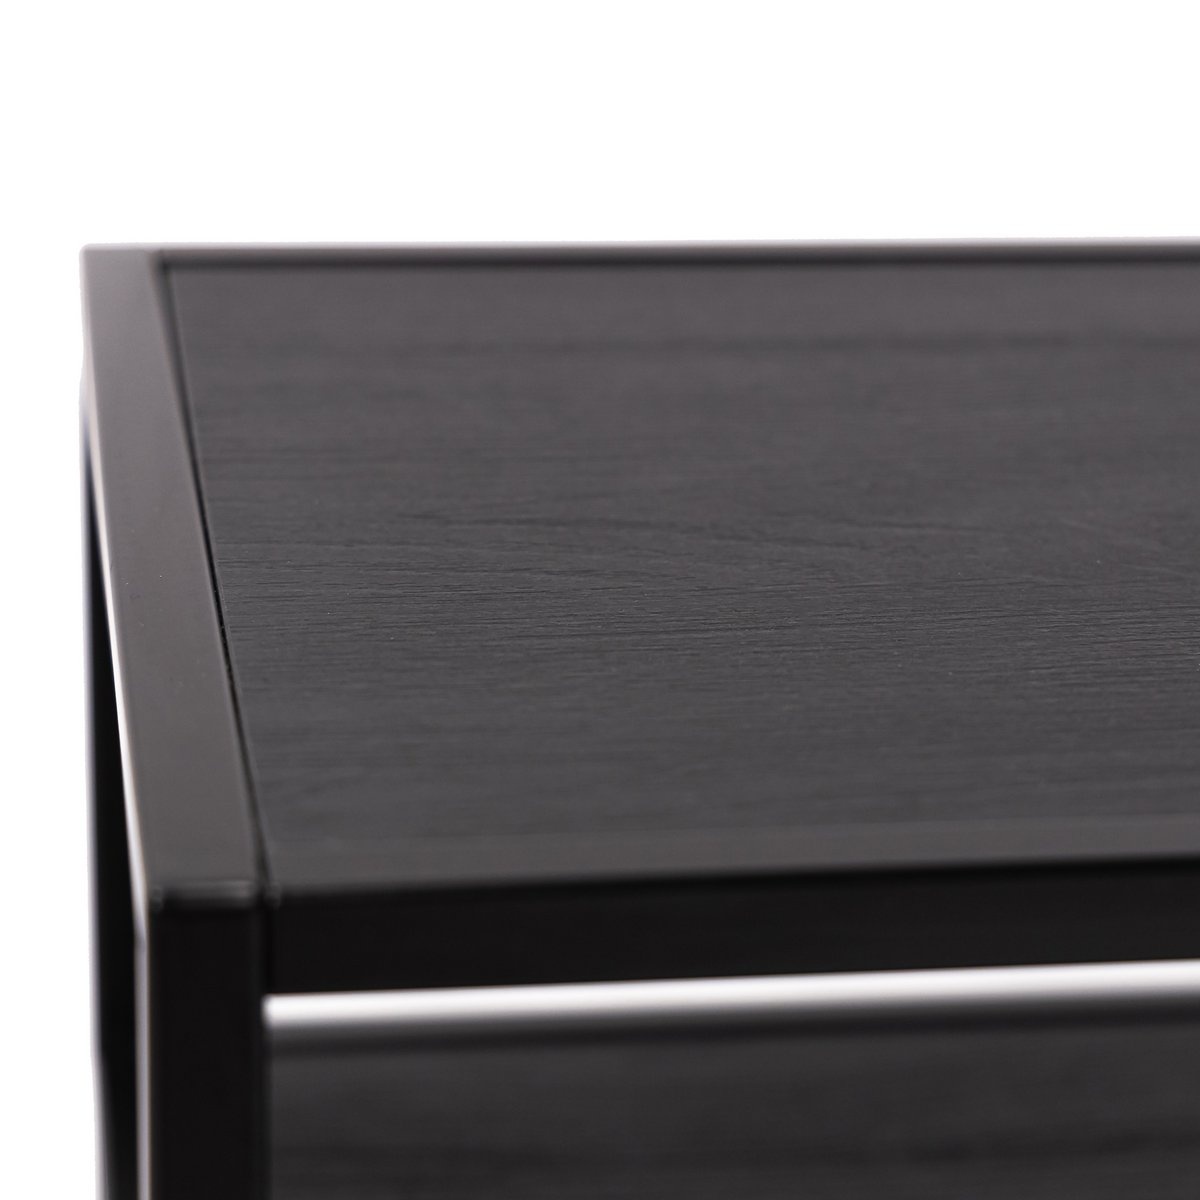 KantoormeubelenPlus Stalux Tv-meubel 'Luuk' 200cm, kleur zwart / zwart eiken